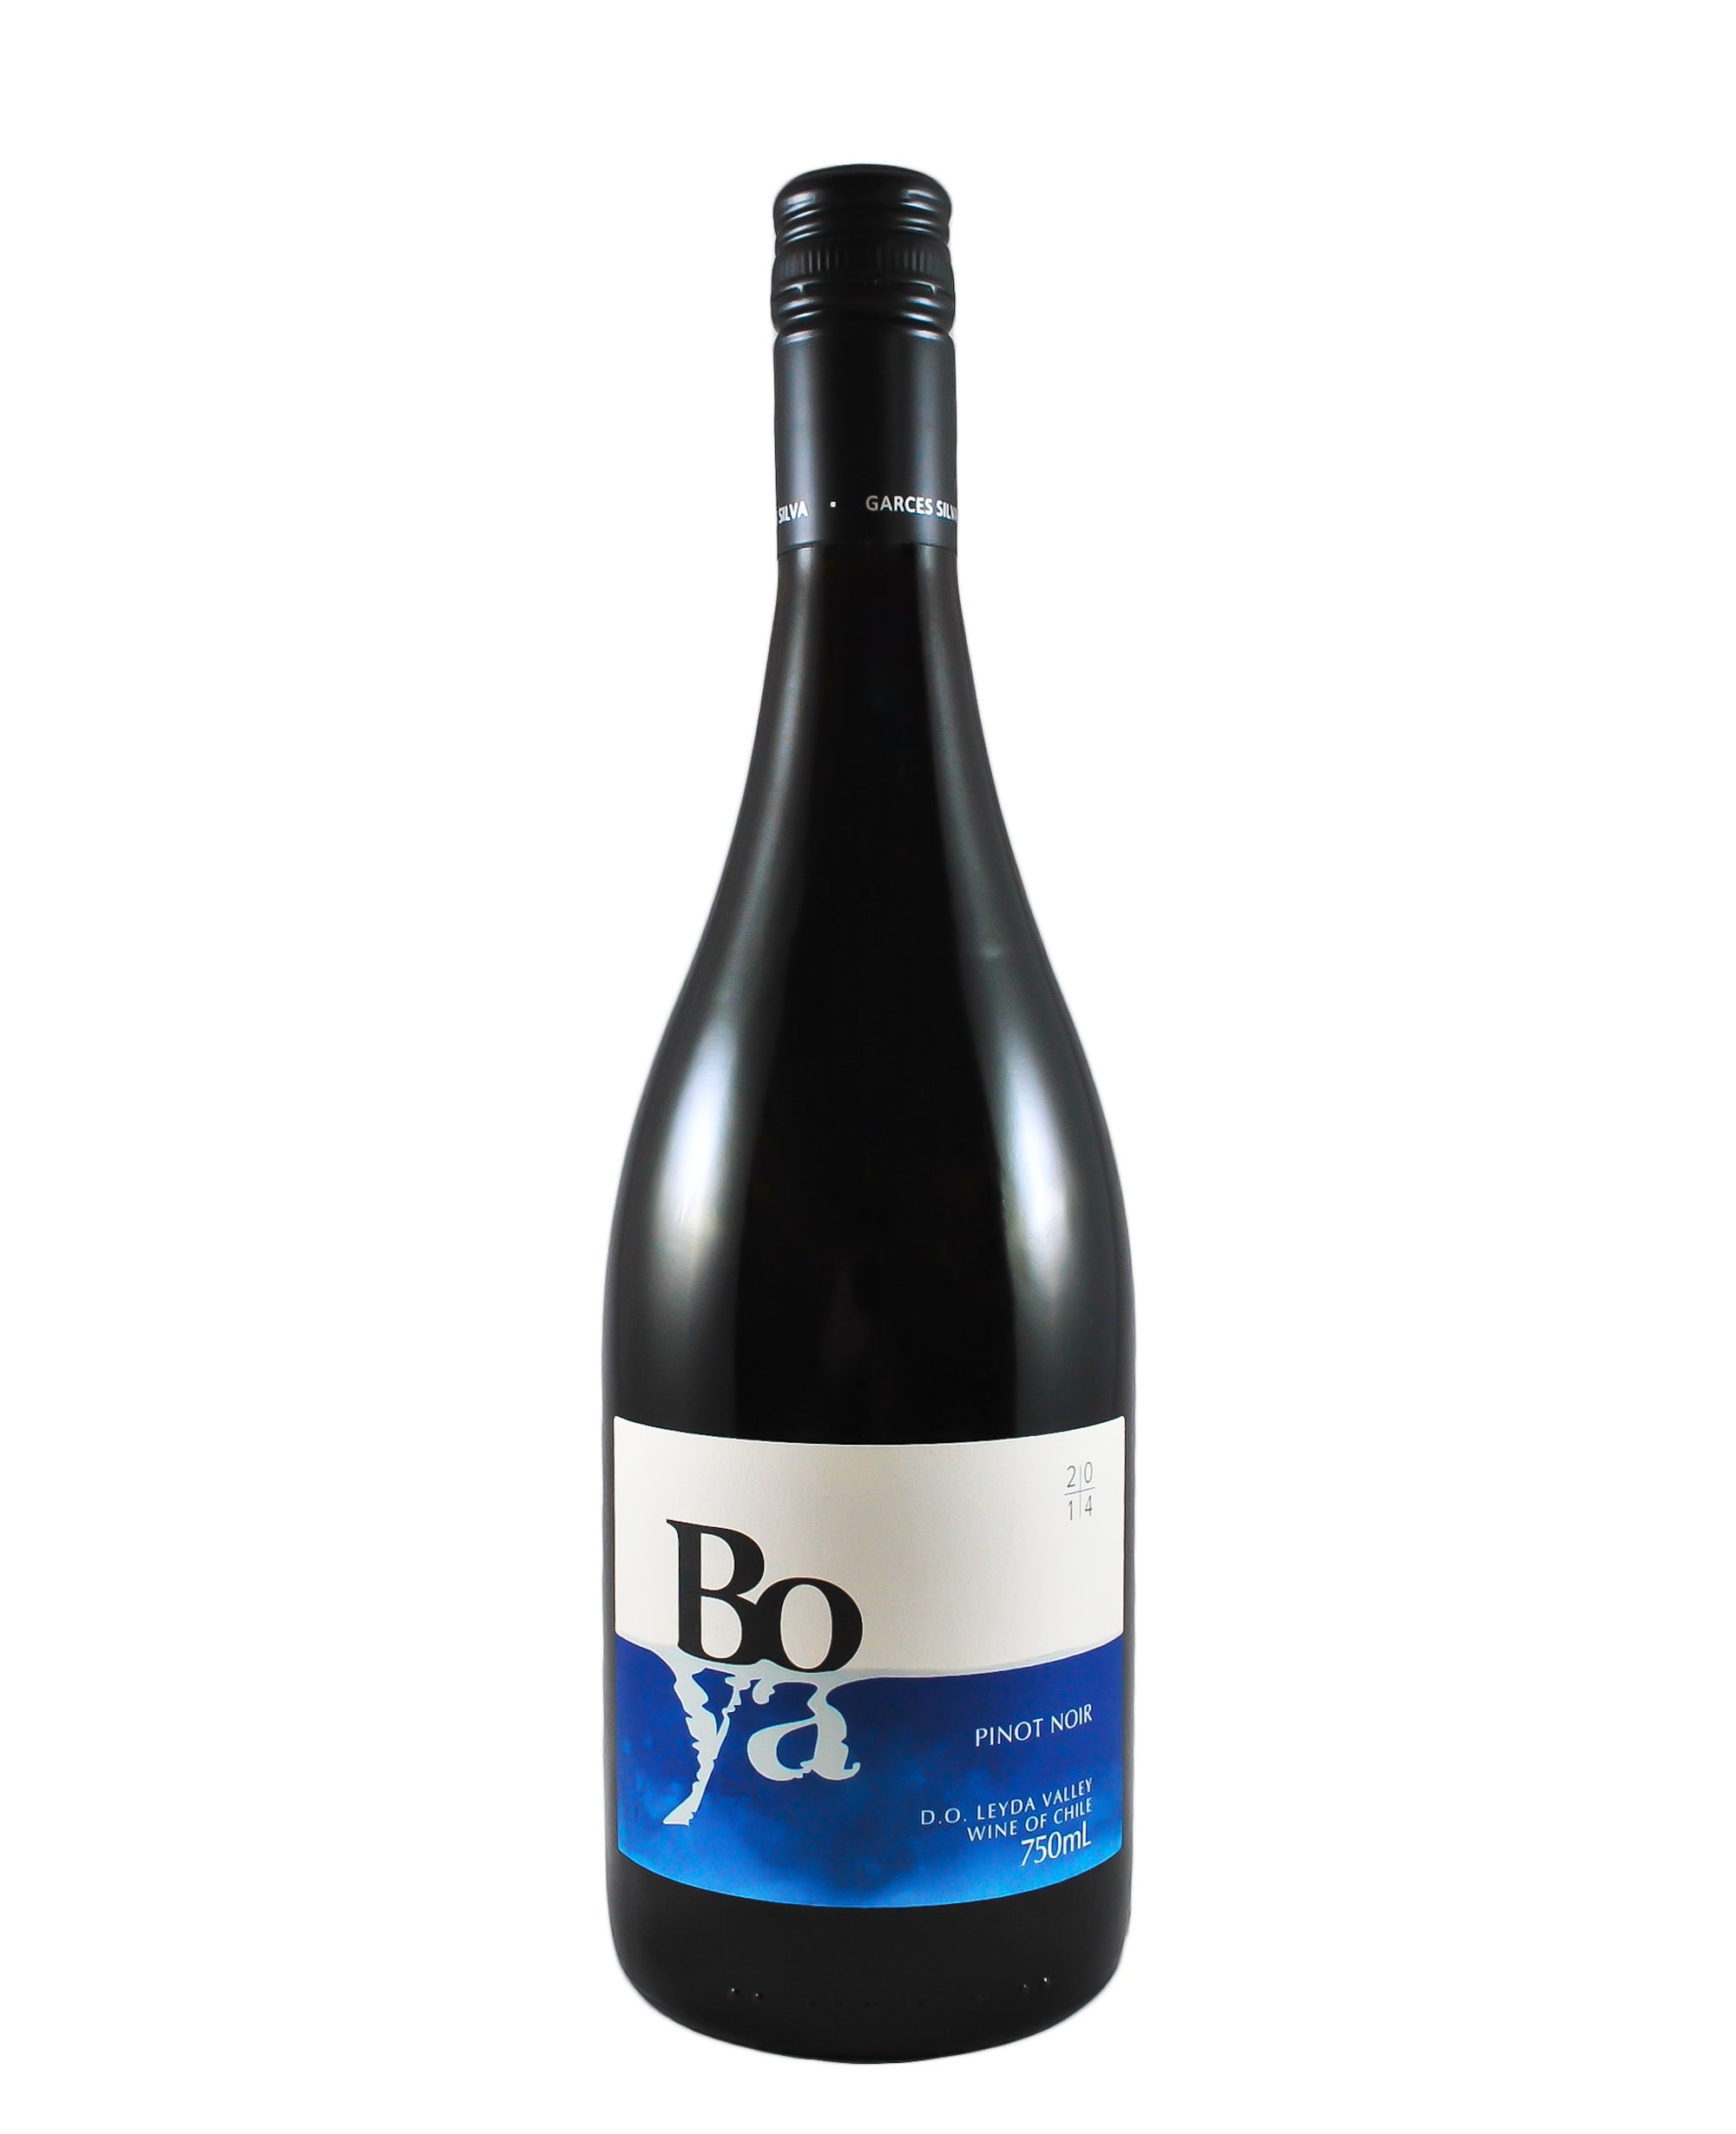 *2R* 2019 Boya Pinot Noir (Leyda Valley, Chile)